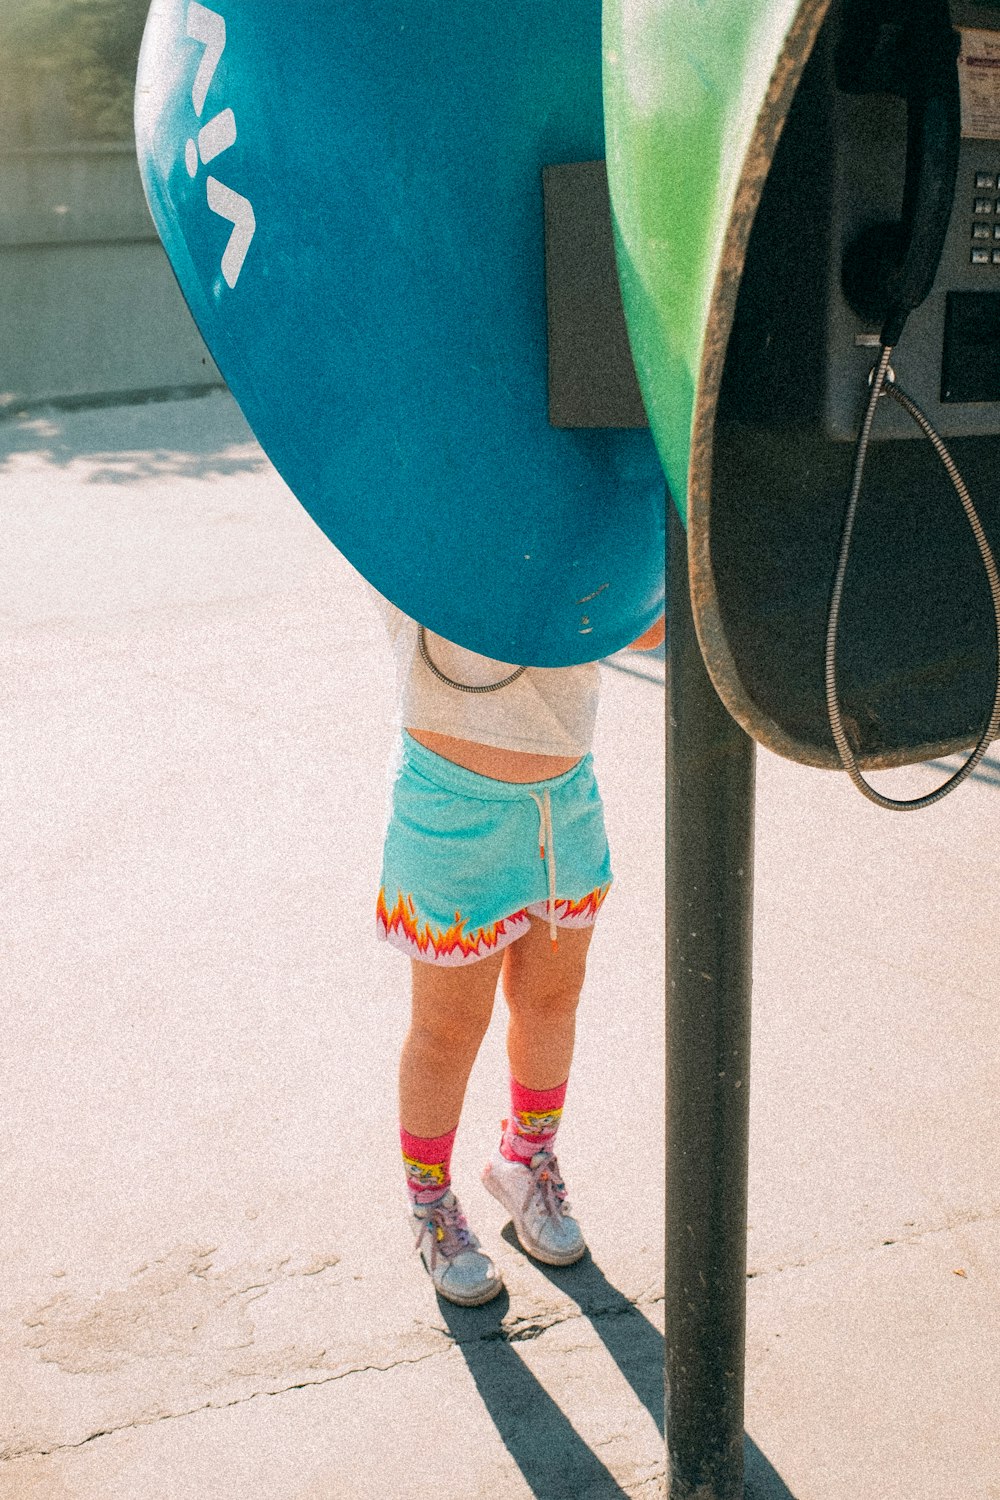 a little girl standing next to a parking meter